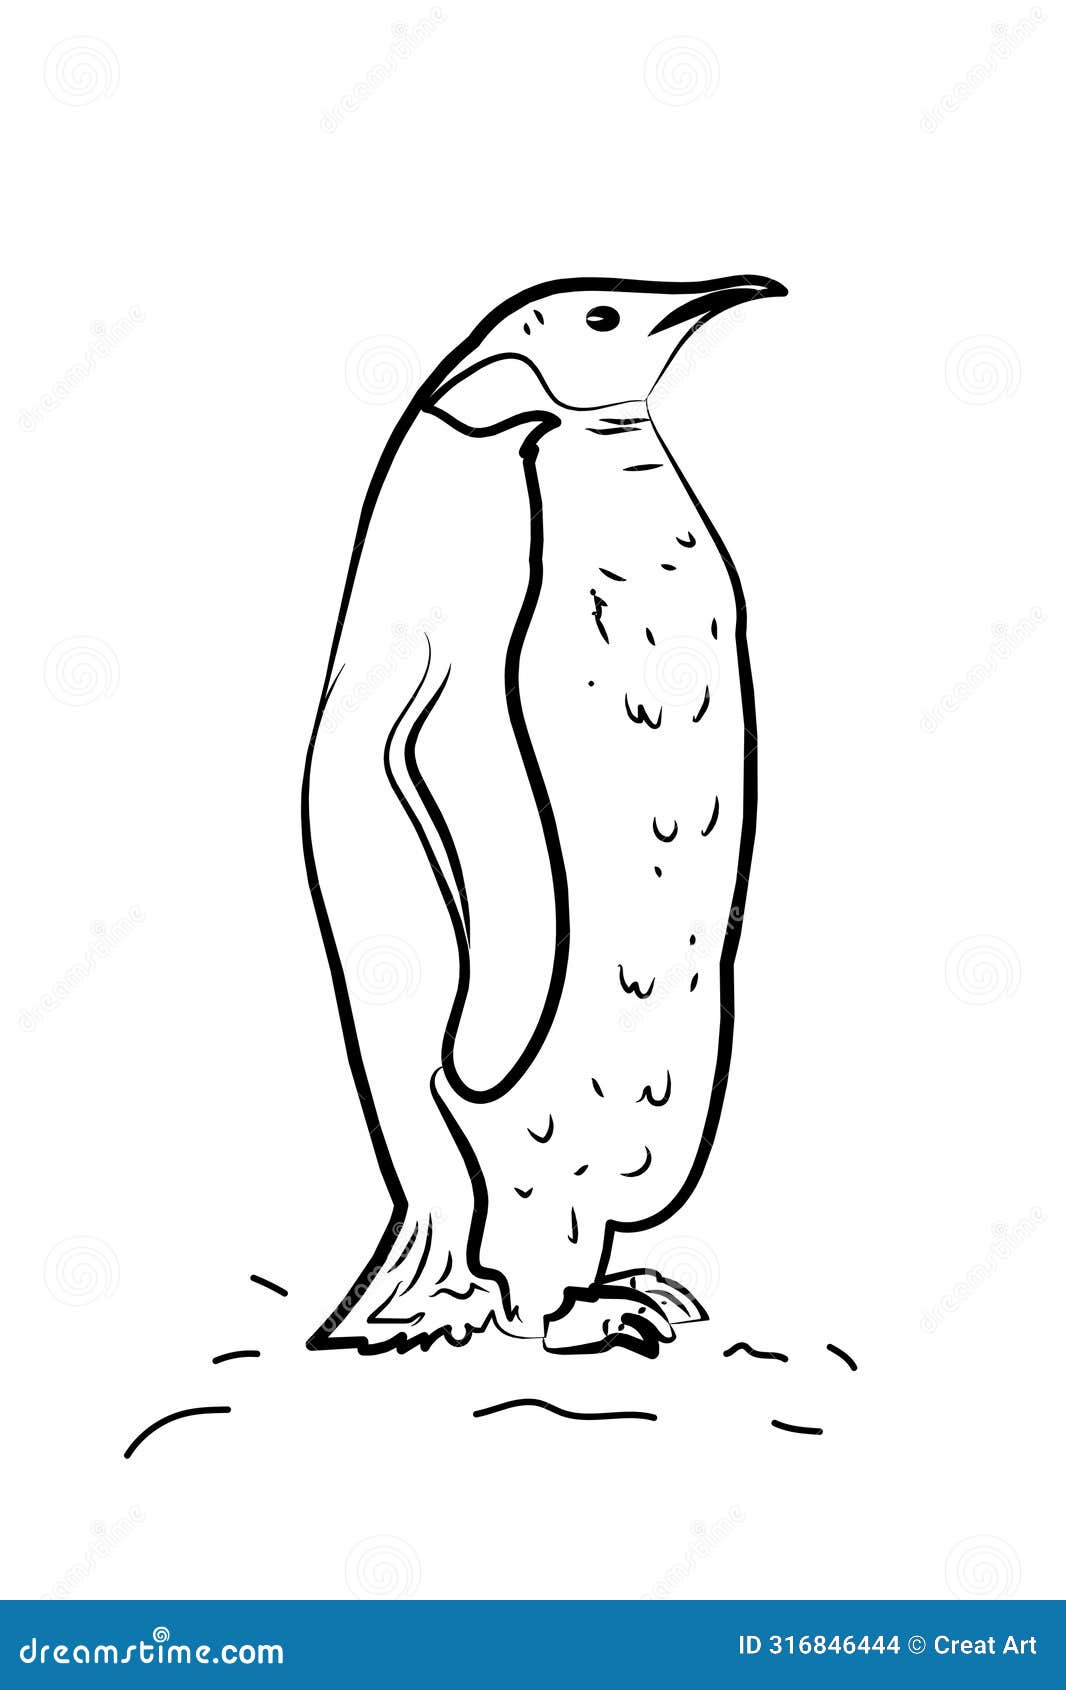 emperor penguin line drawing